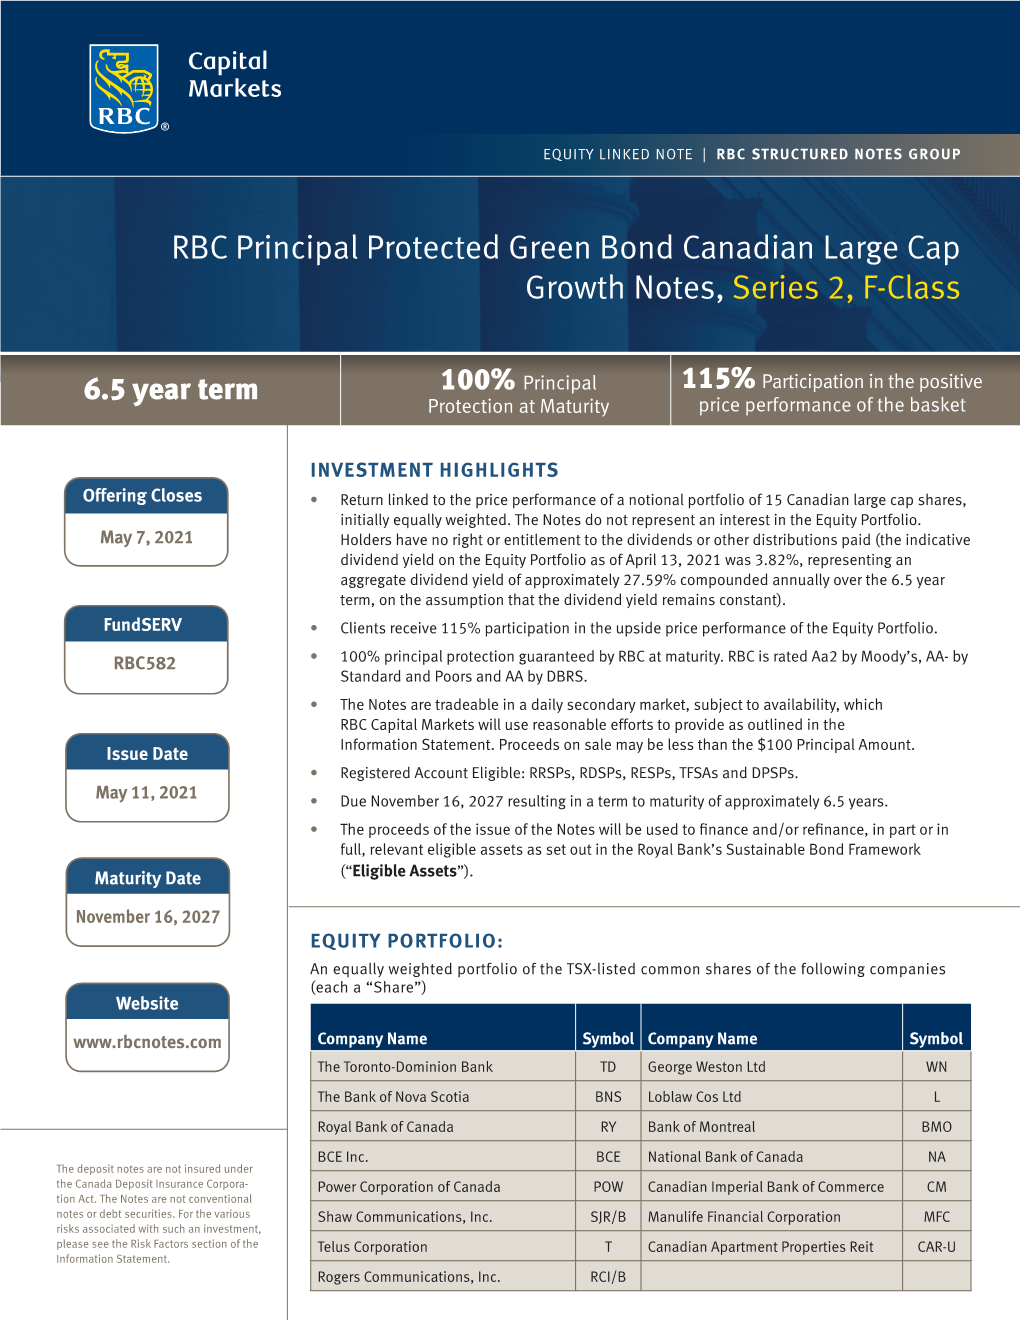 RBC Principal Protected Green Bond Canadian Large Cap Growth Notes, Series 2, F-Class